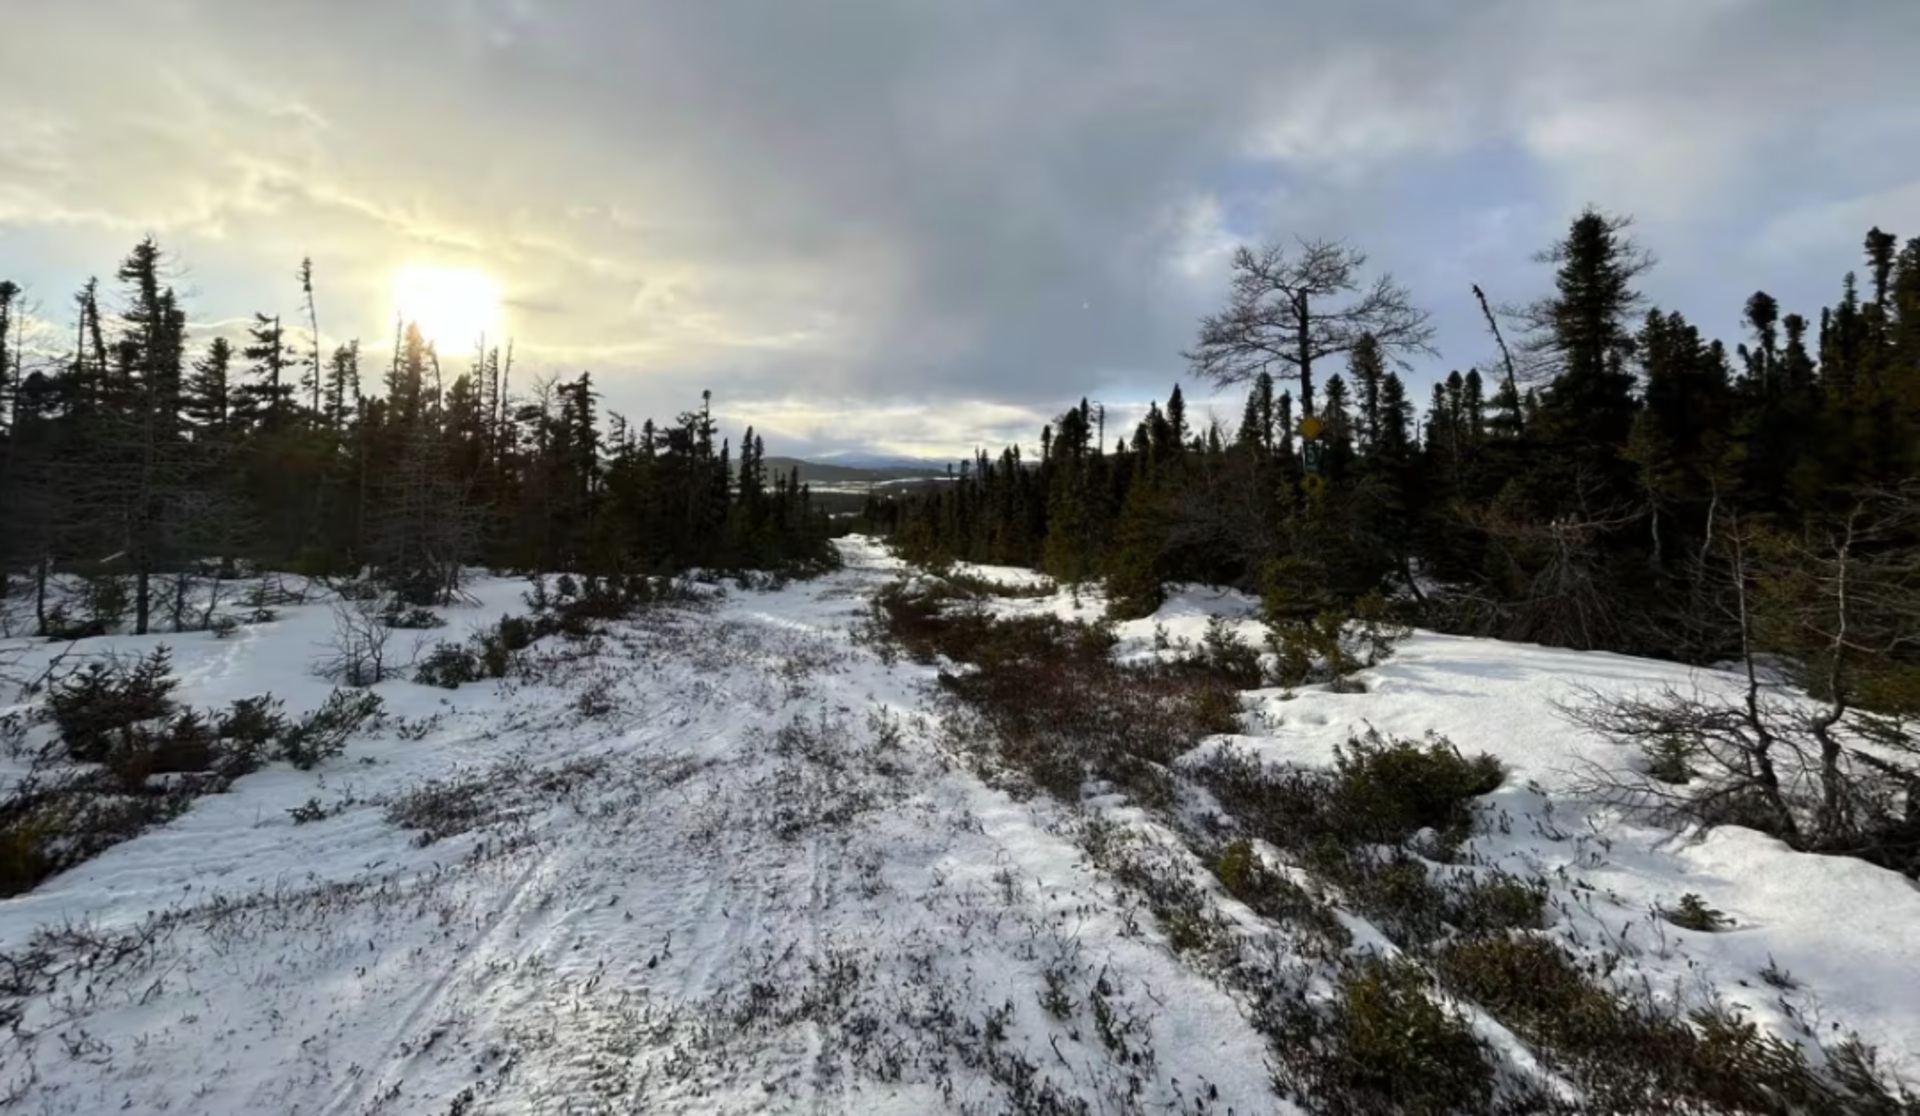 Labrador winter warmer than average as Indigenous communities struggle to adapt 